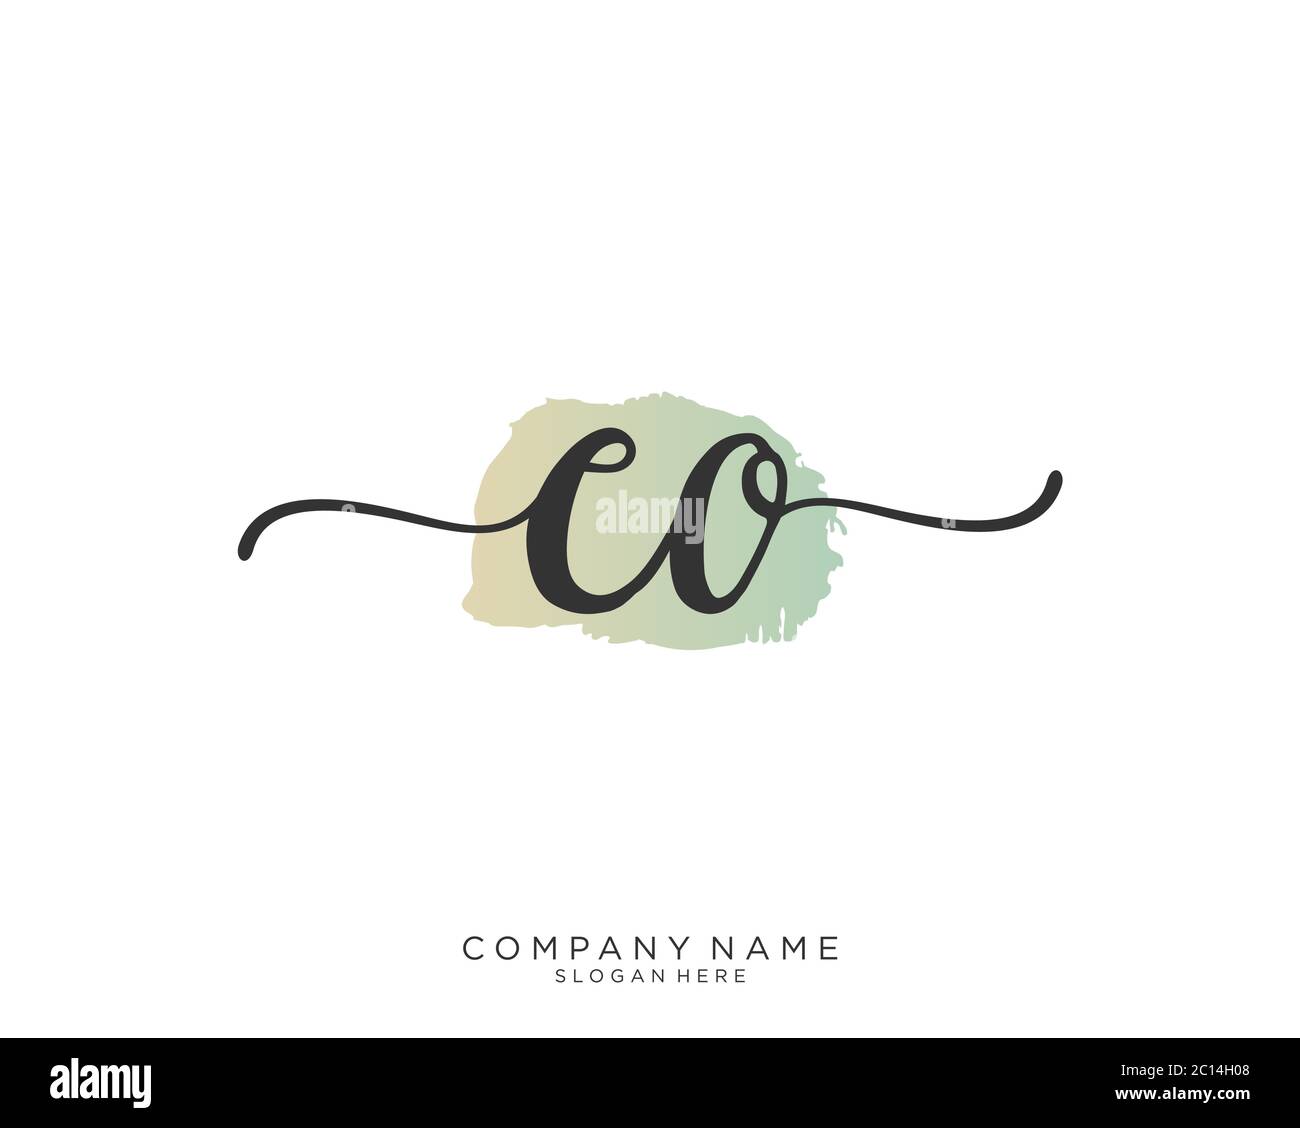 CO Initial handwriting logo vector Stock Vector